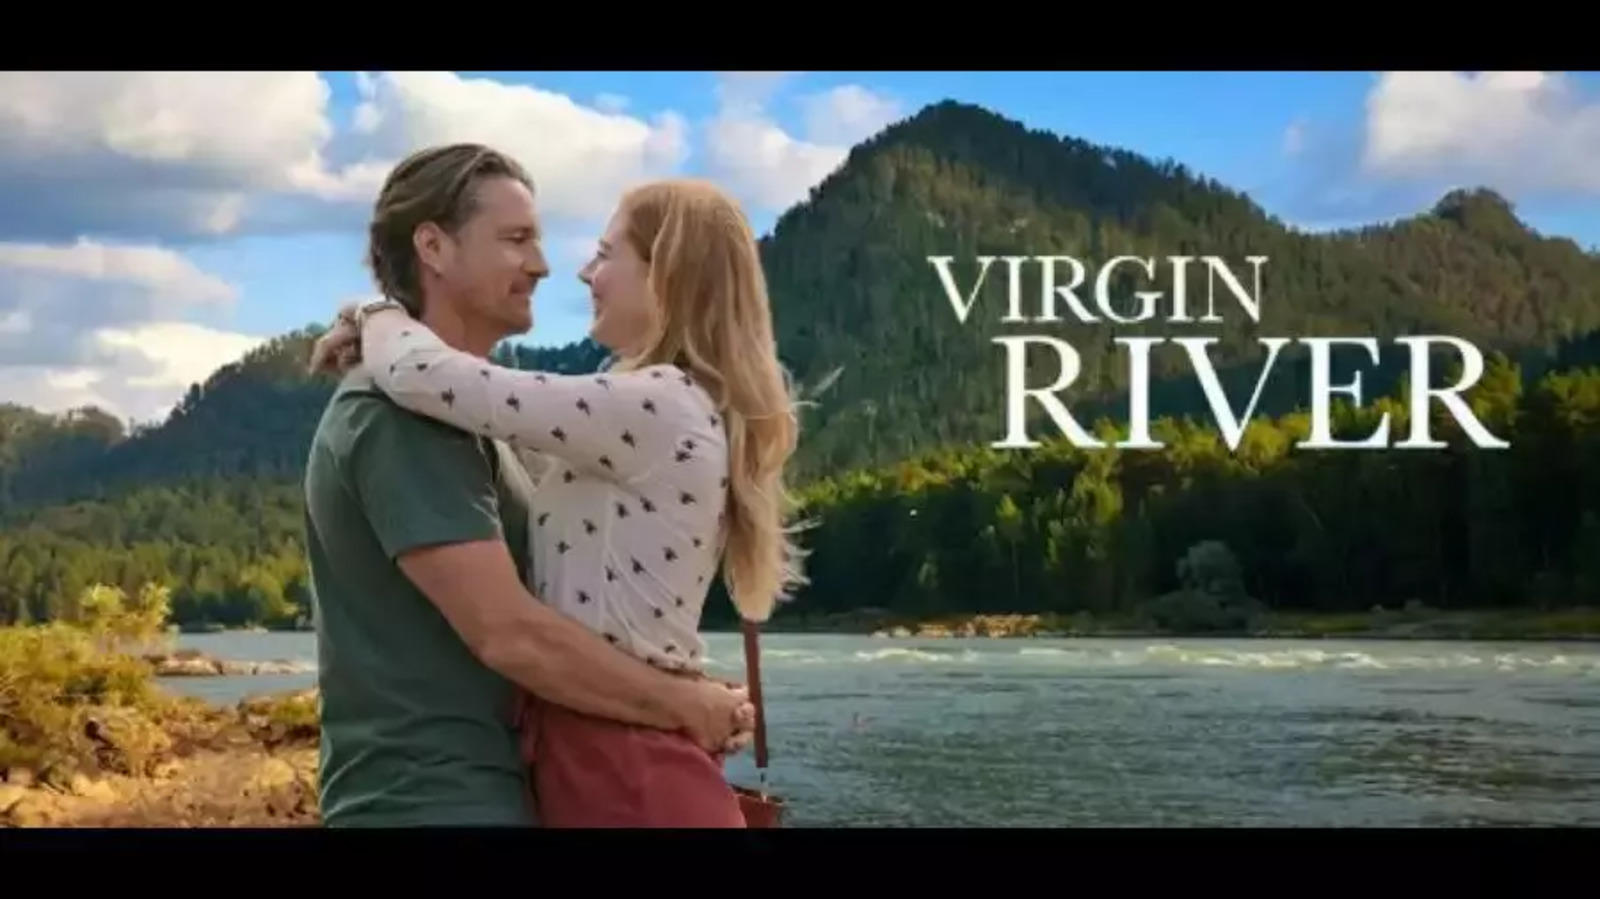 Netflix's Virgin River Season 4 Will Premiere in Summer 2022